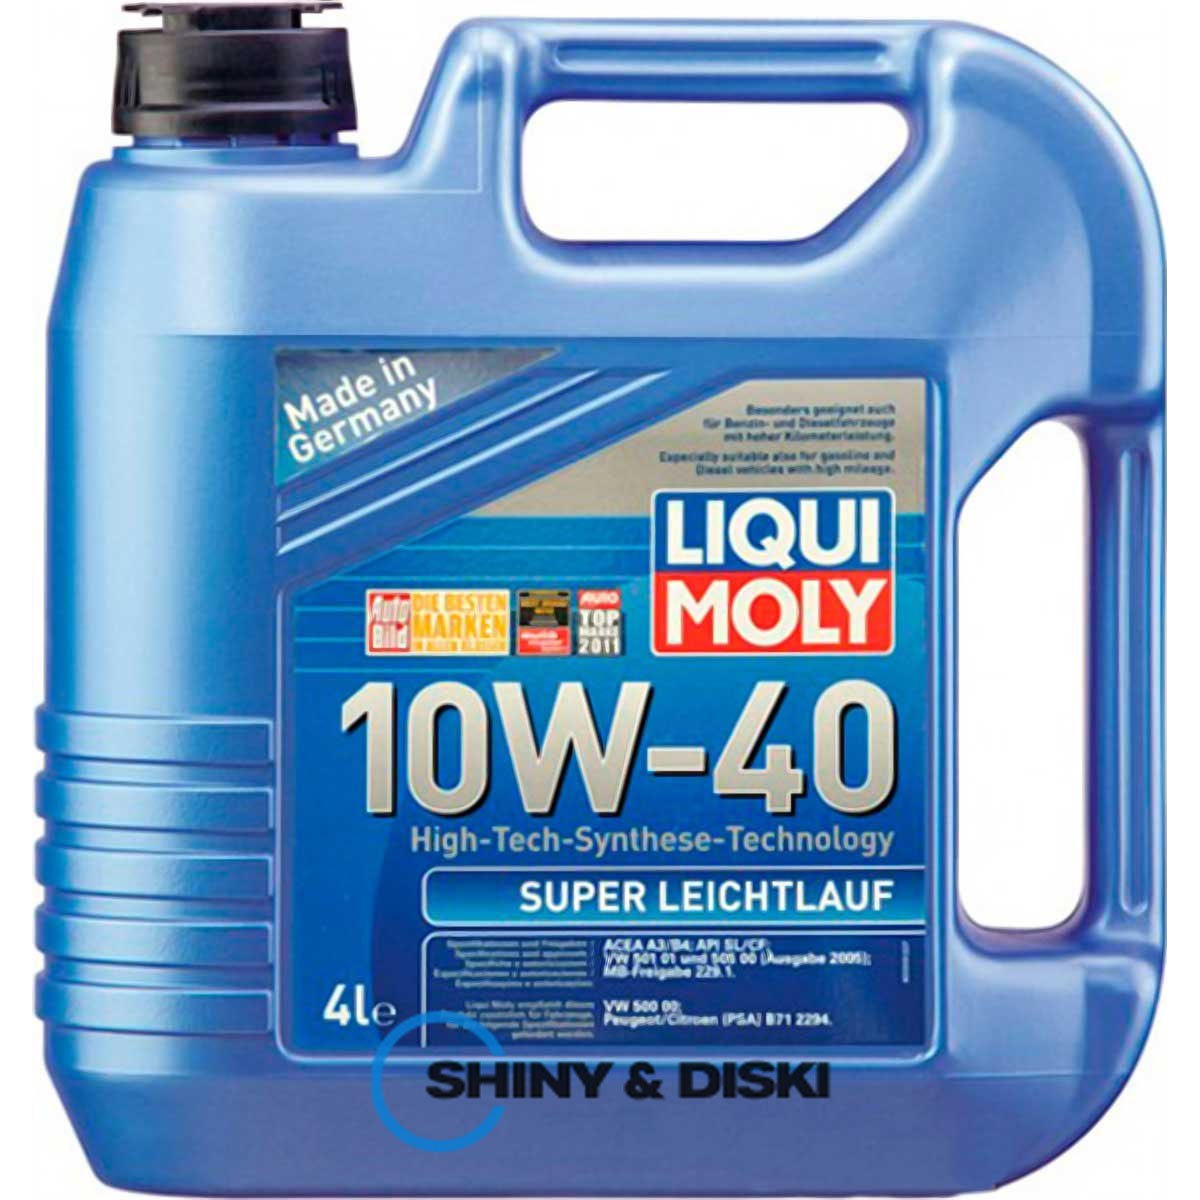 liqui moly super leichtlauf 10w-40 (4л)